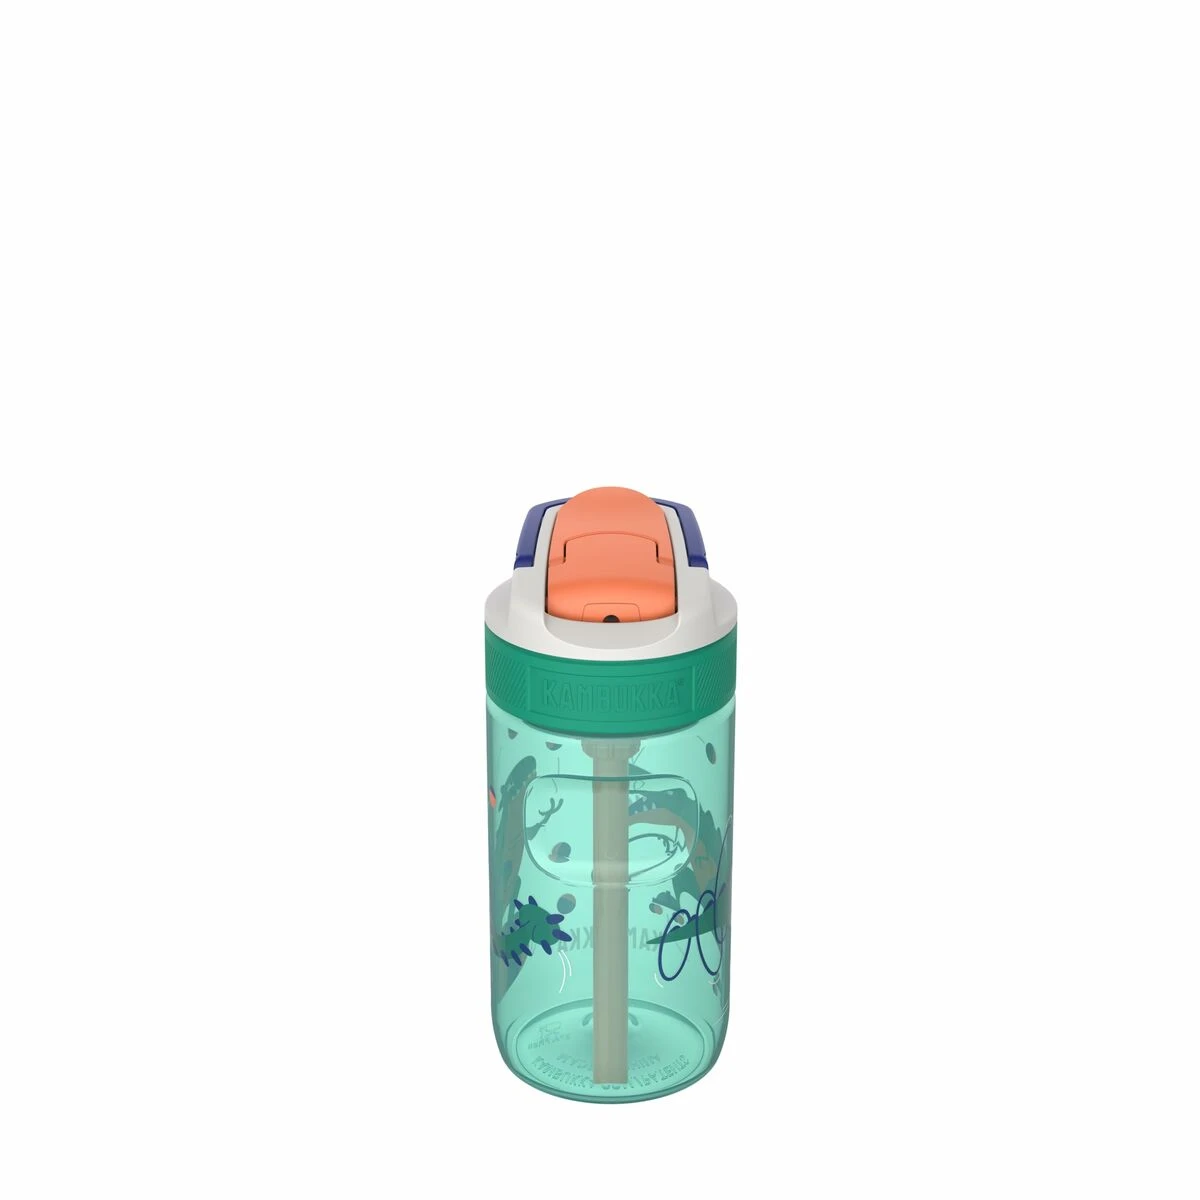 Green kids' water bottle with sea life patterns, orange lid.